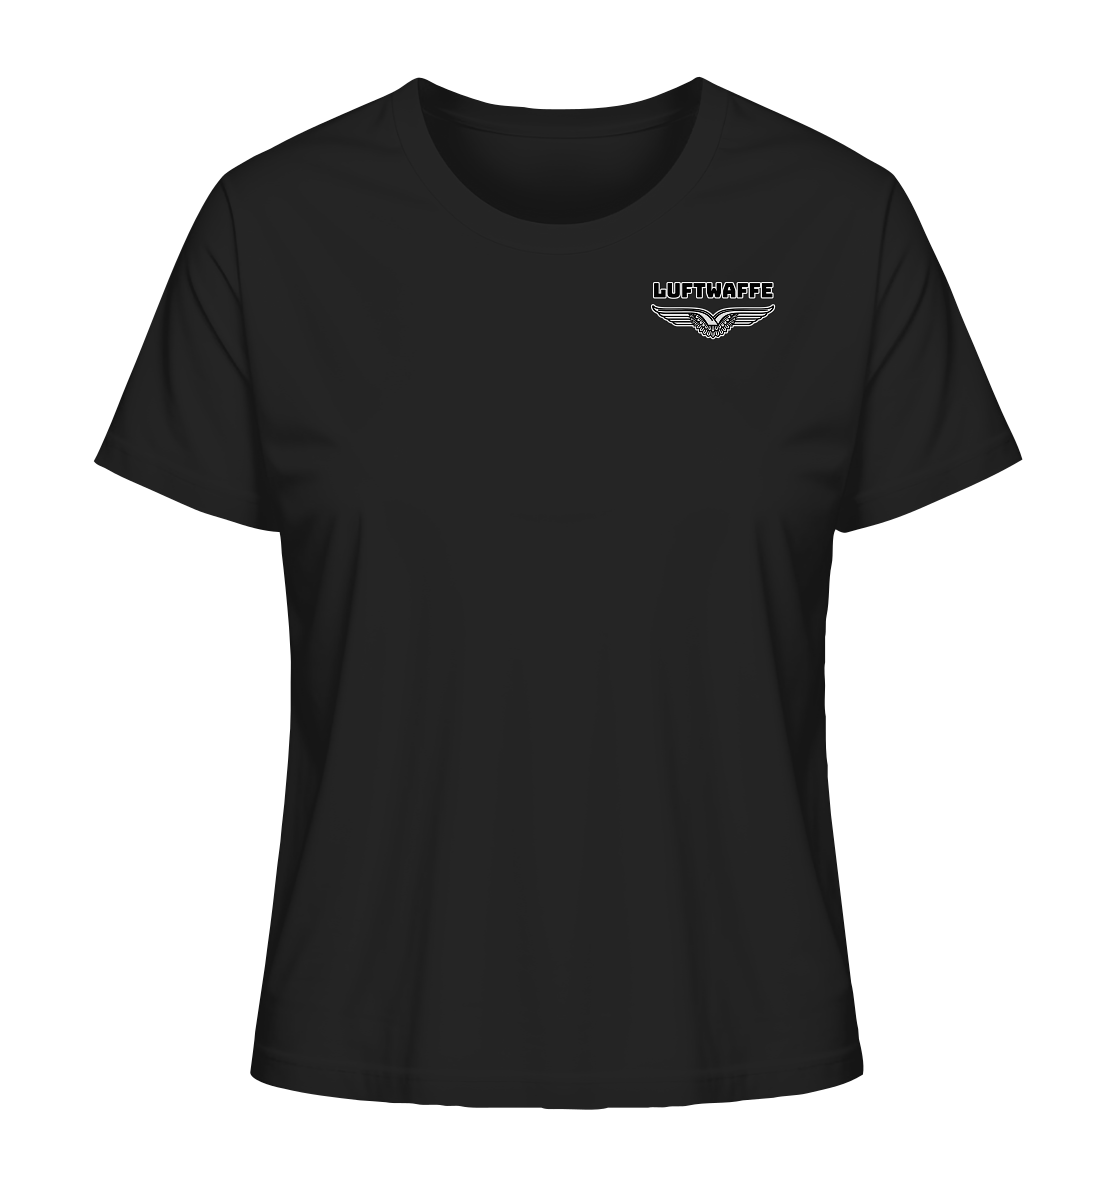 Team Luftwaffe - Eurofighter - Ladies Organic Shirt